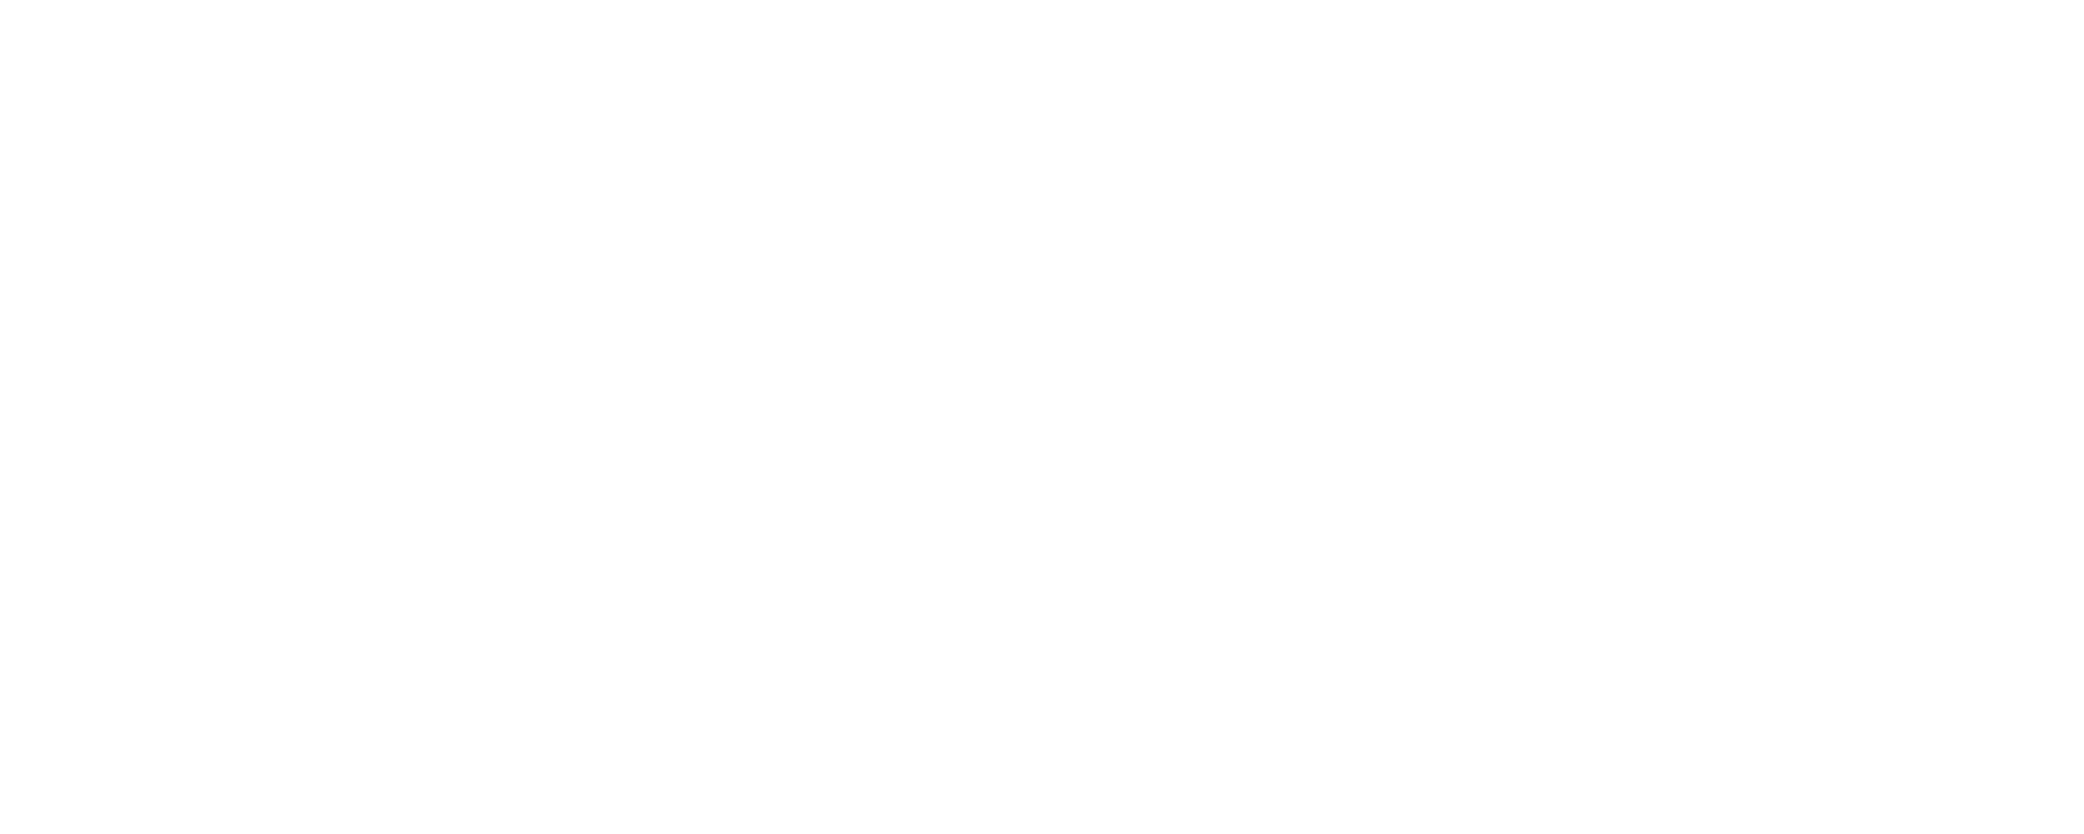 Pfizer White 3 logo